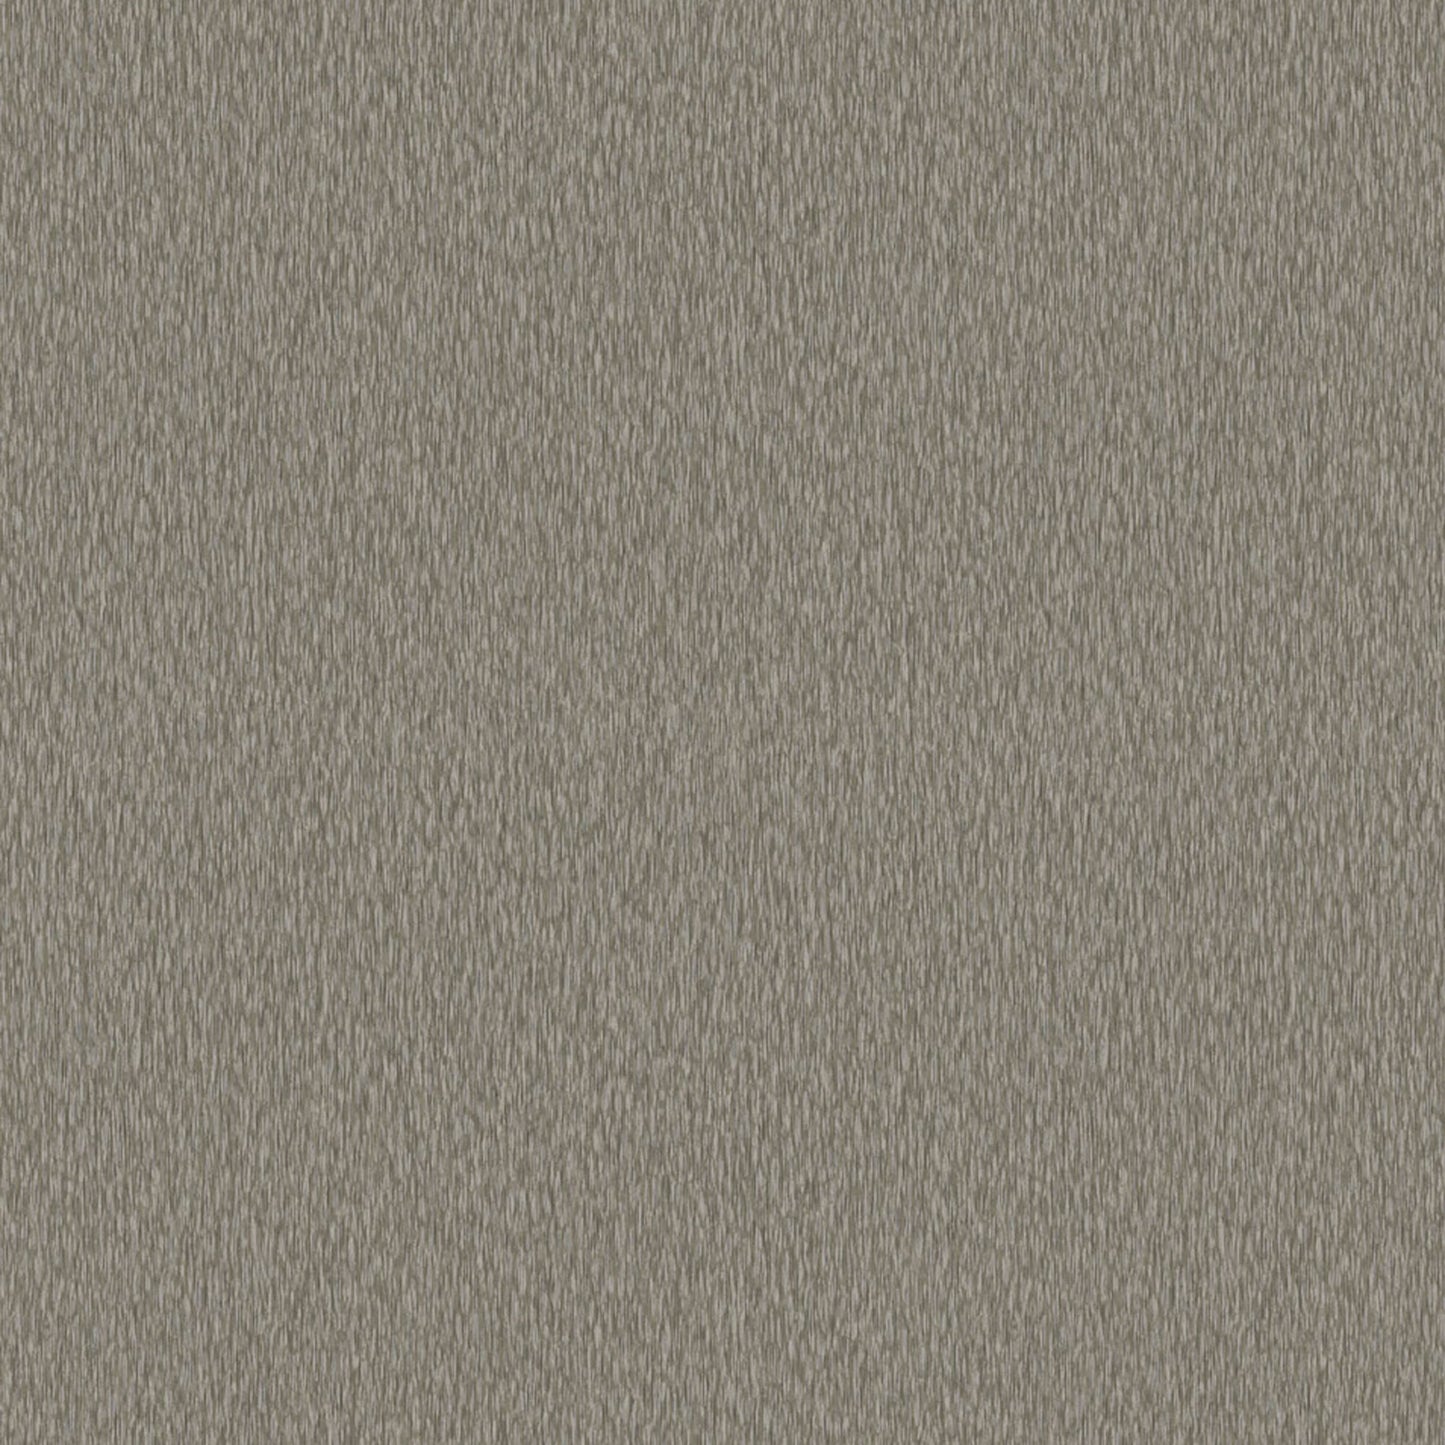 Purchase JF Wallpaper Item# 8222 79W9331 Beige Texture Wallpaper